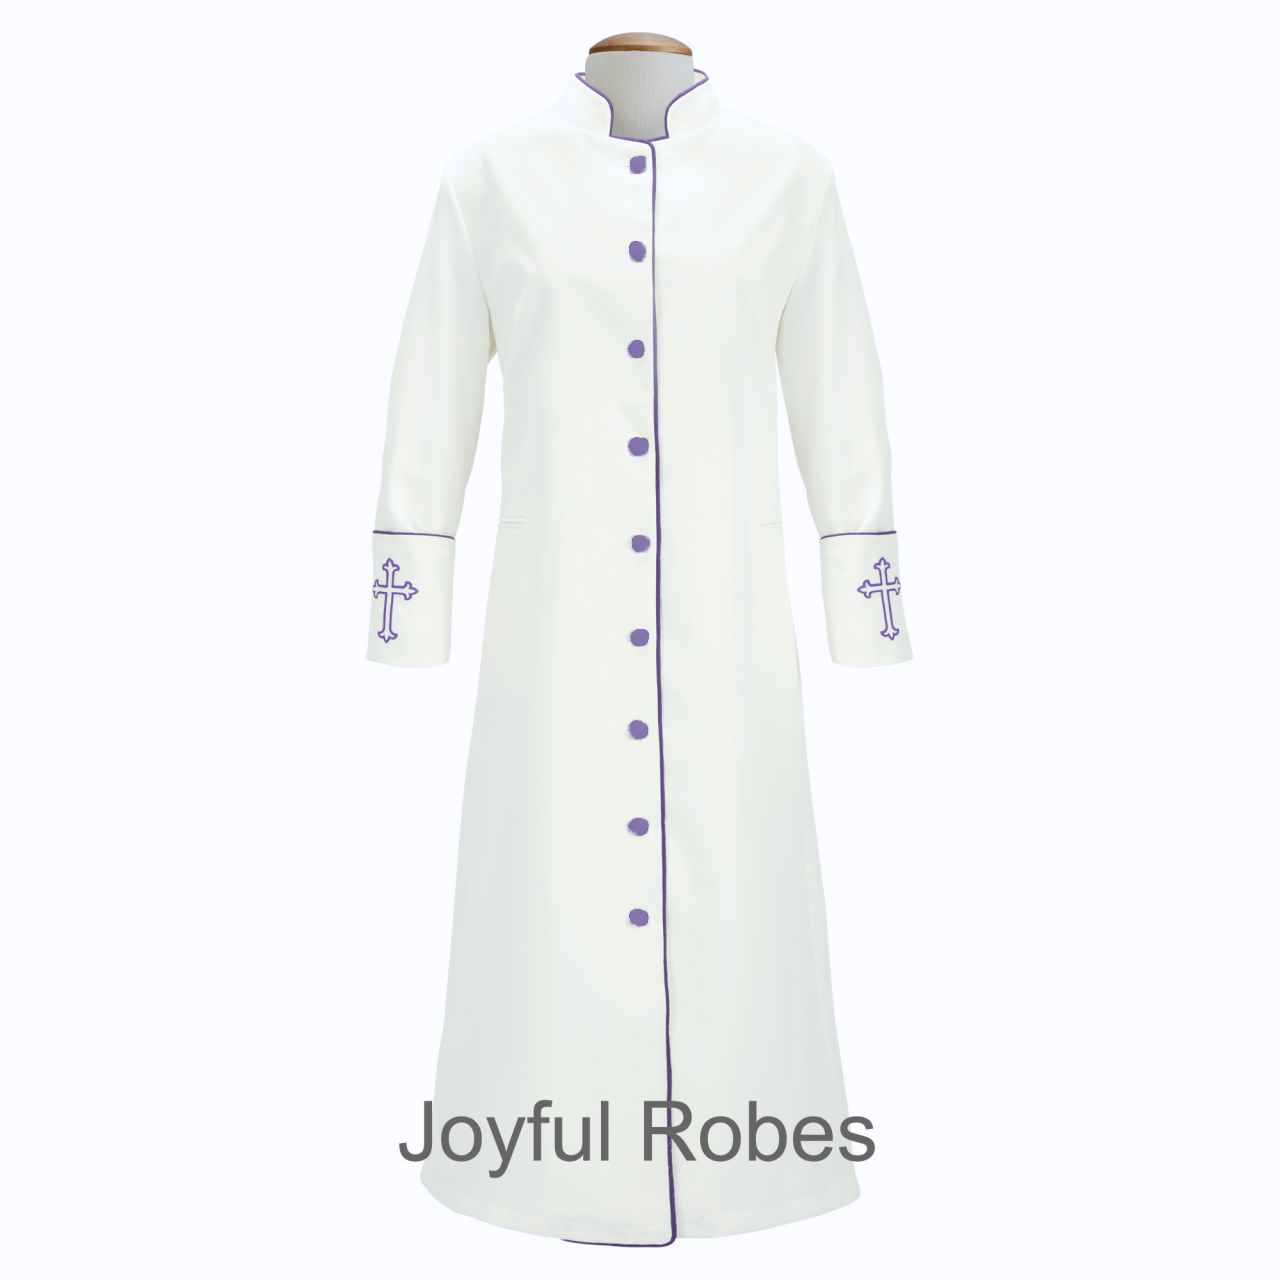 204 W. Women's Pastor/Clergy Robe - White/Purple Design